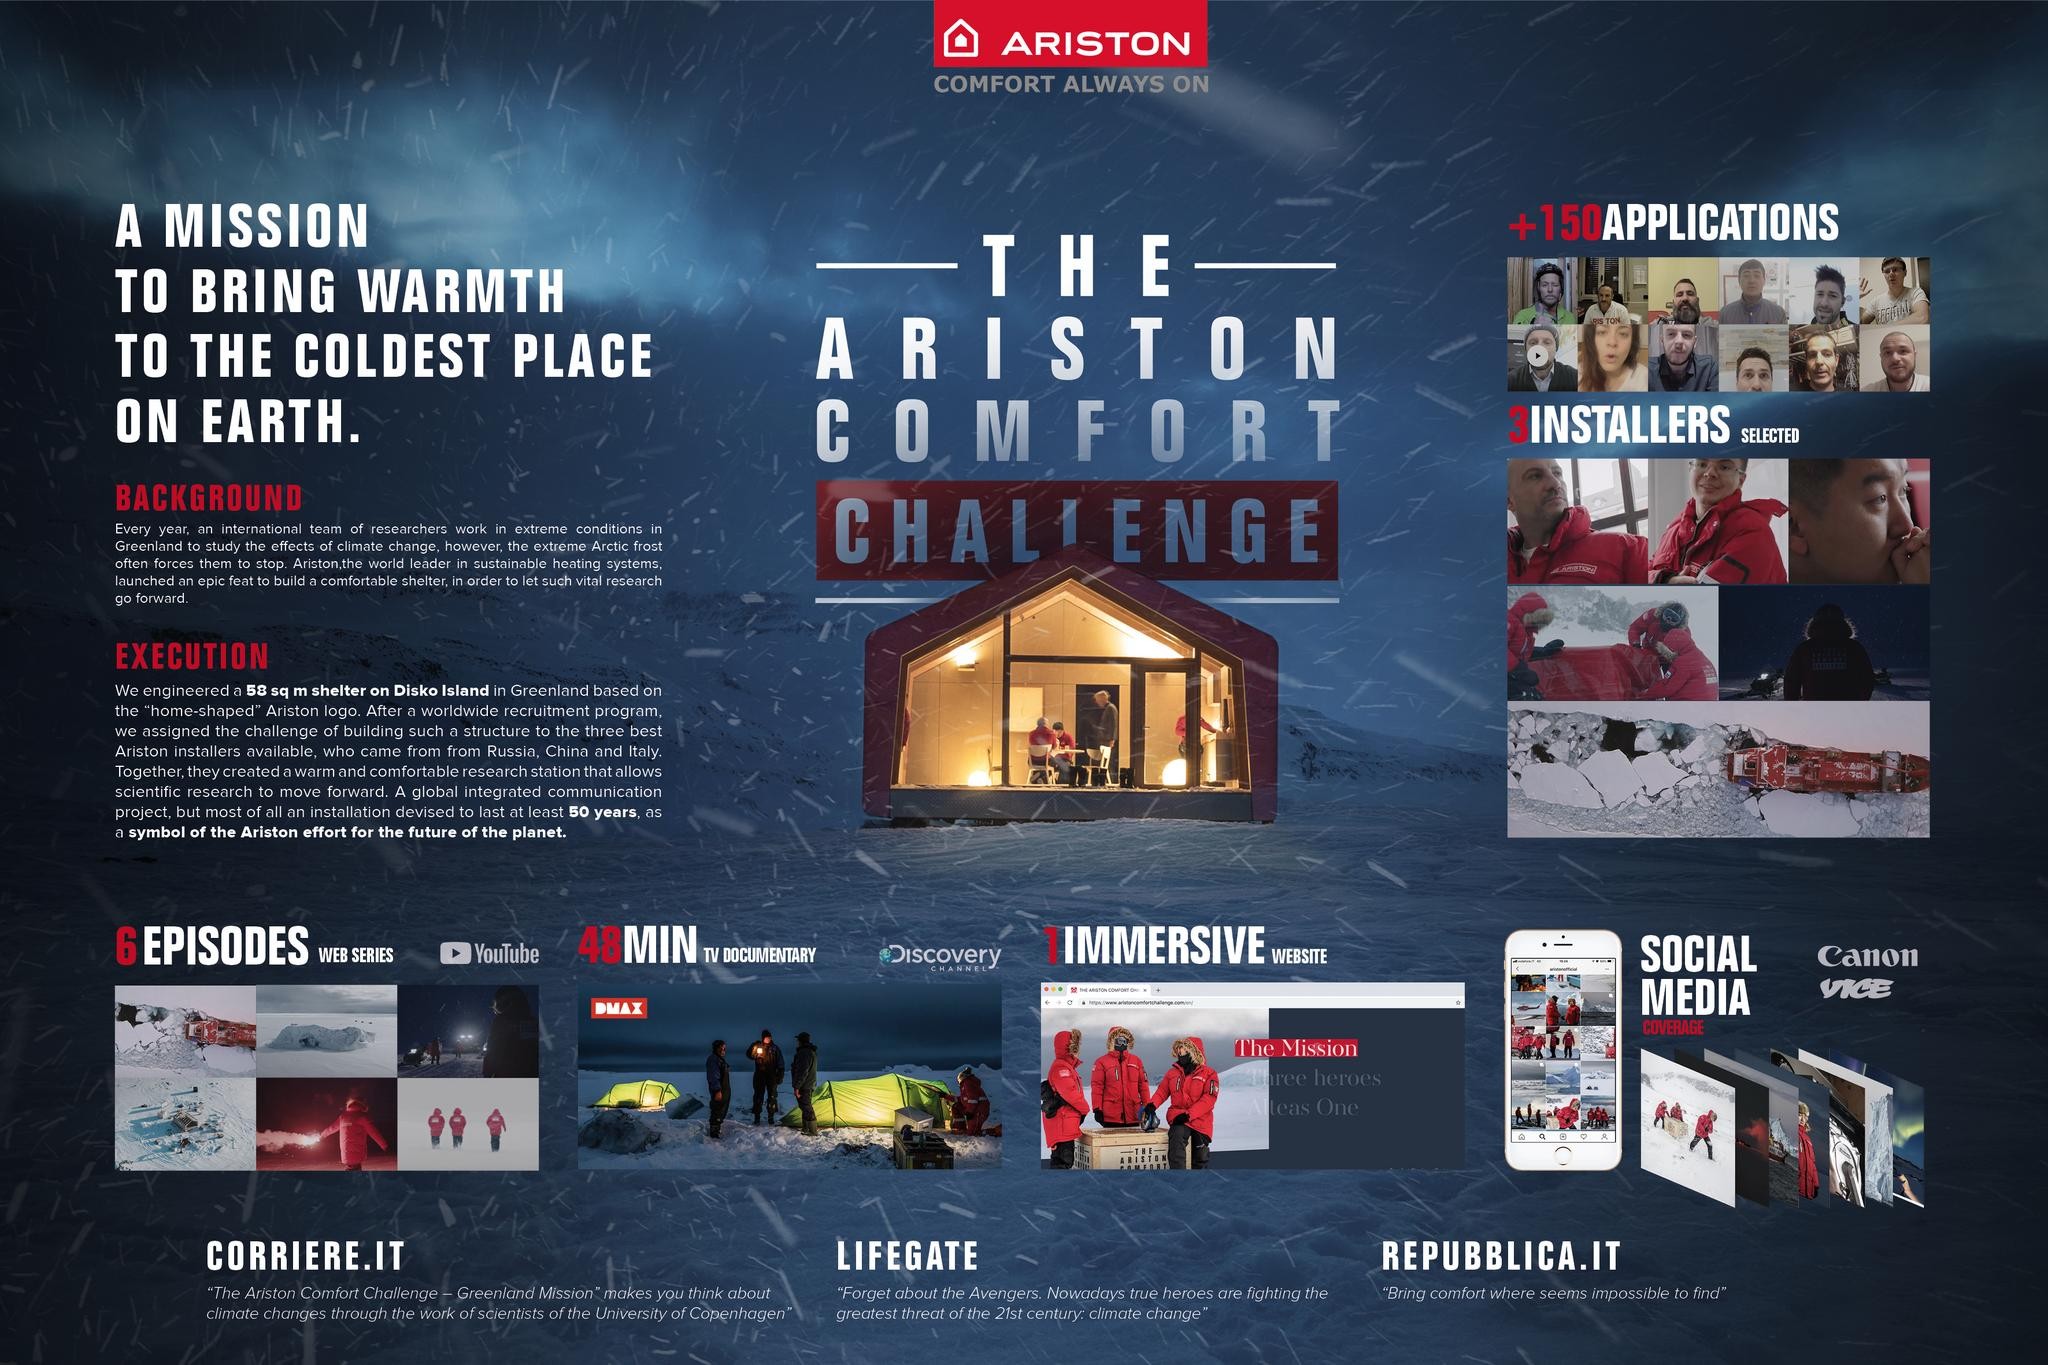 The Ariston Comfort Challenge